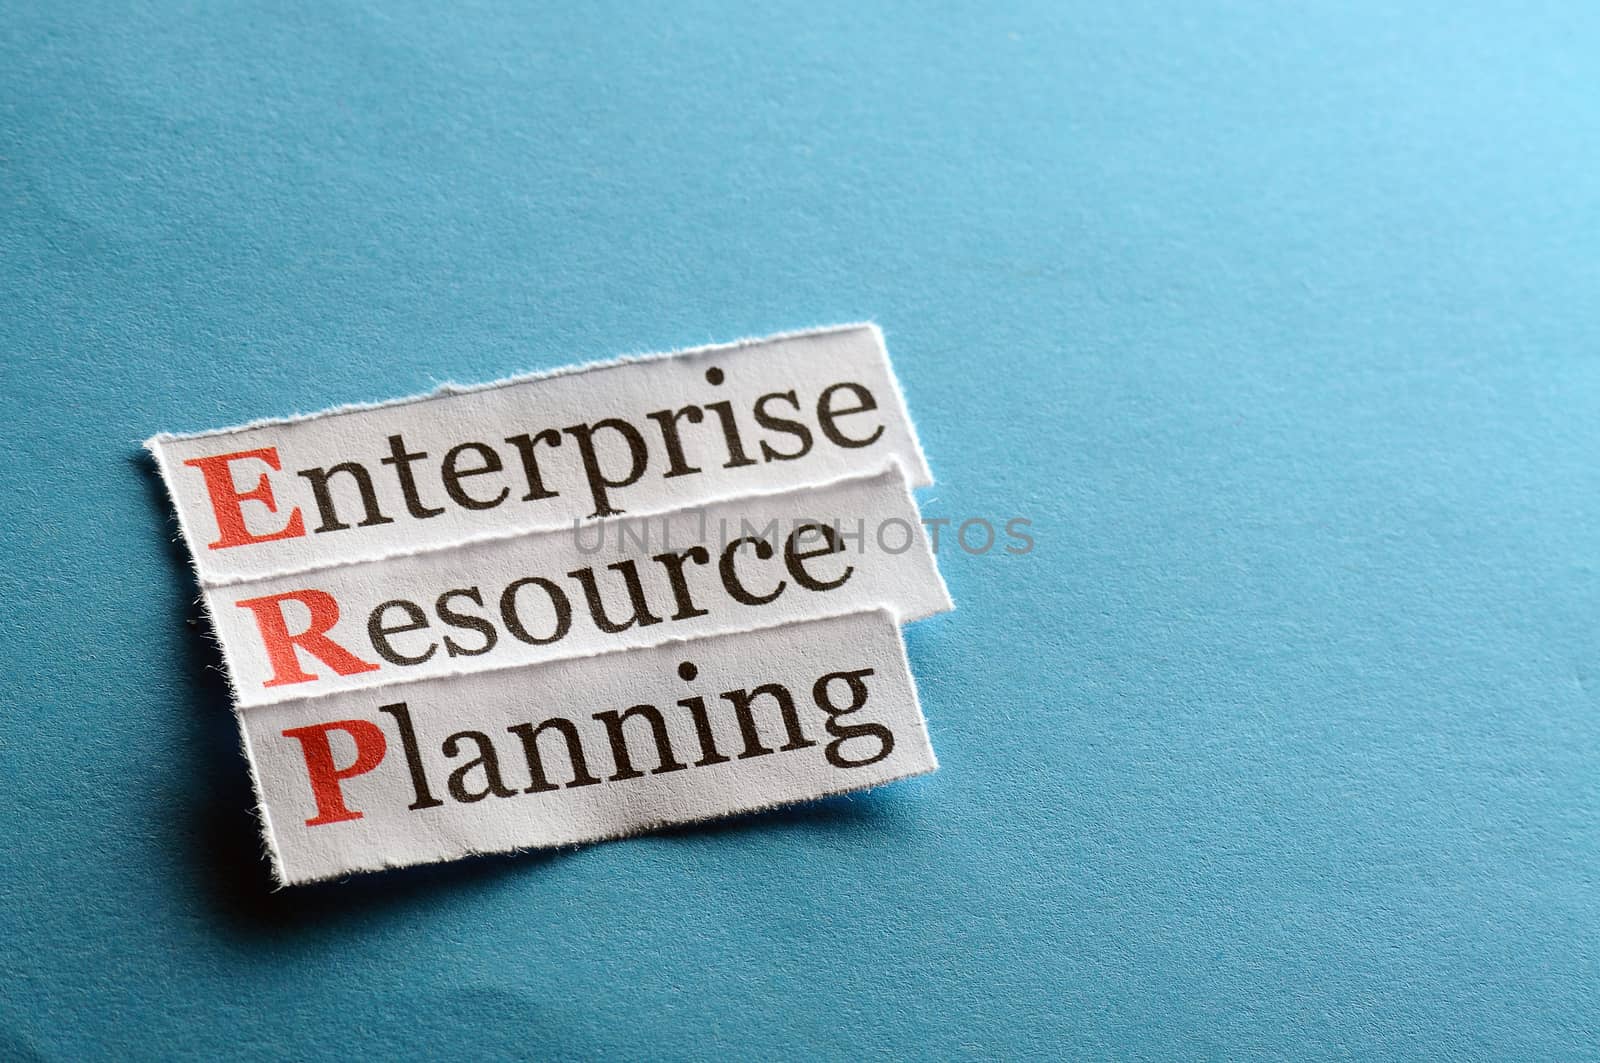 erp - enterprise resource planning on blue paper